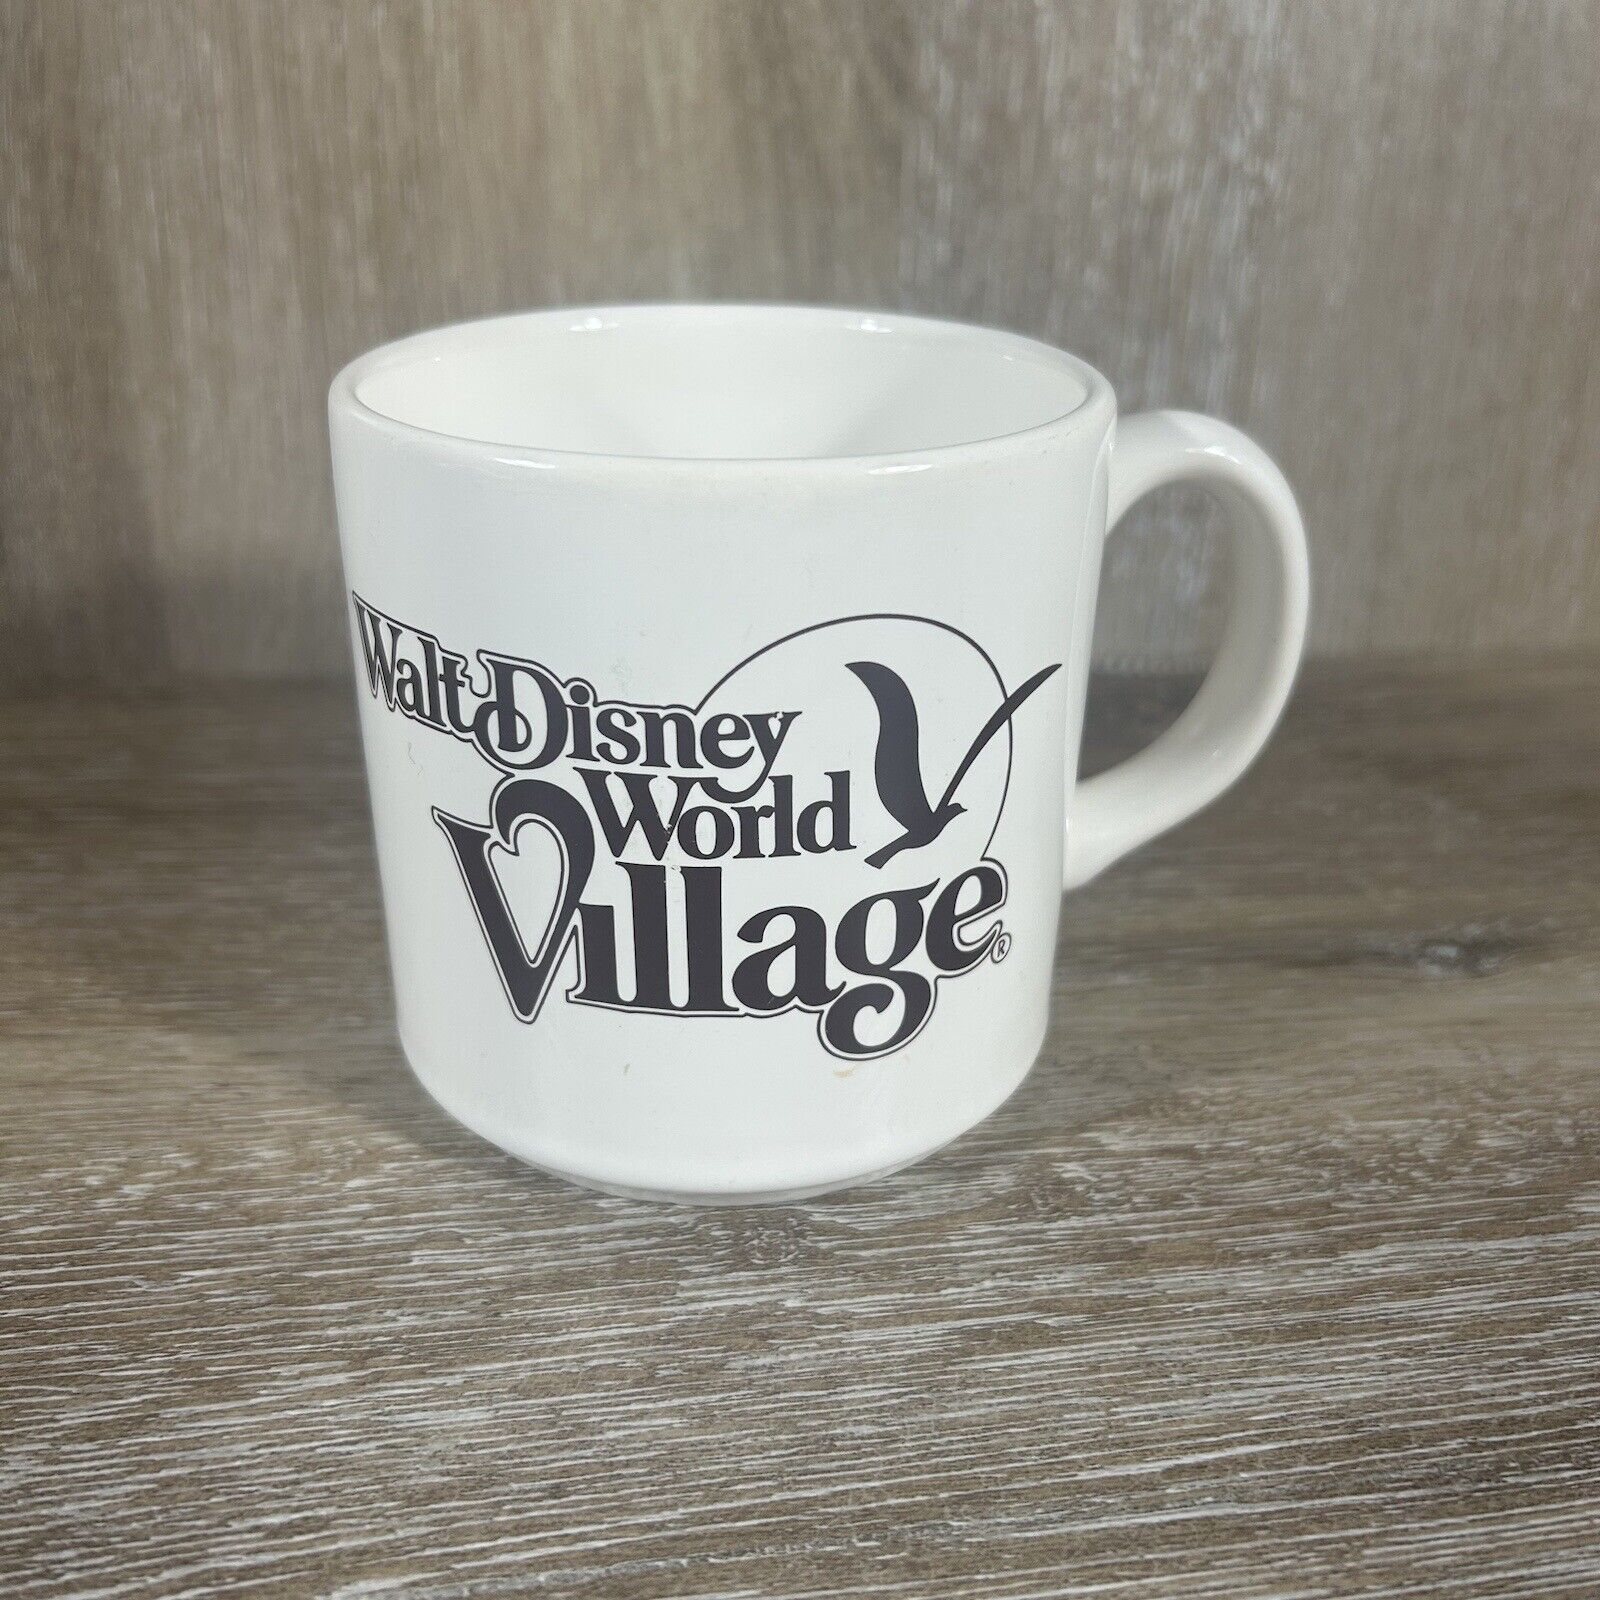 Vintage Walt Disney World Village Retro Coffee Mug Cup Diner Classic Nostalgic